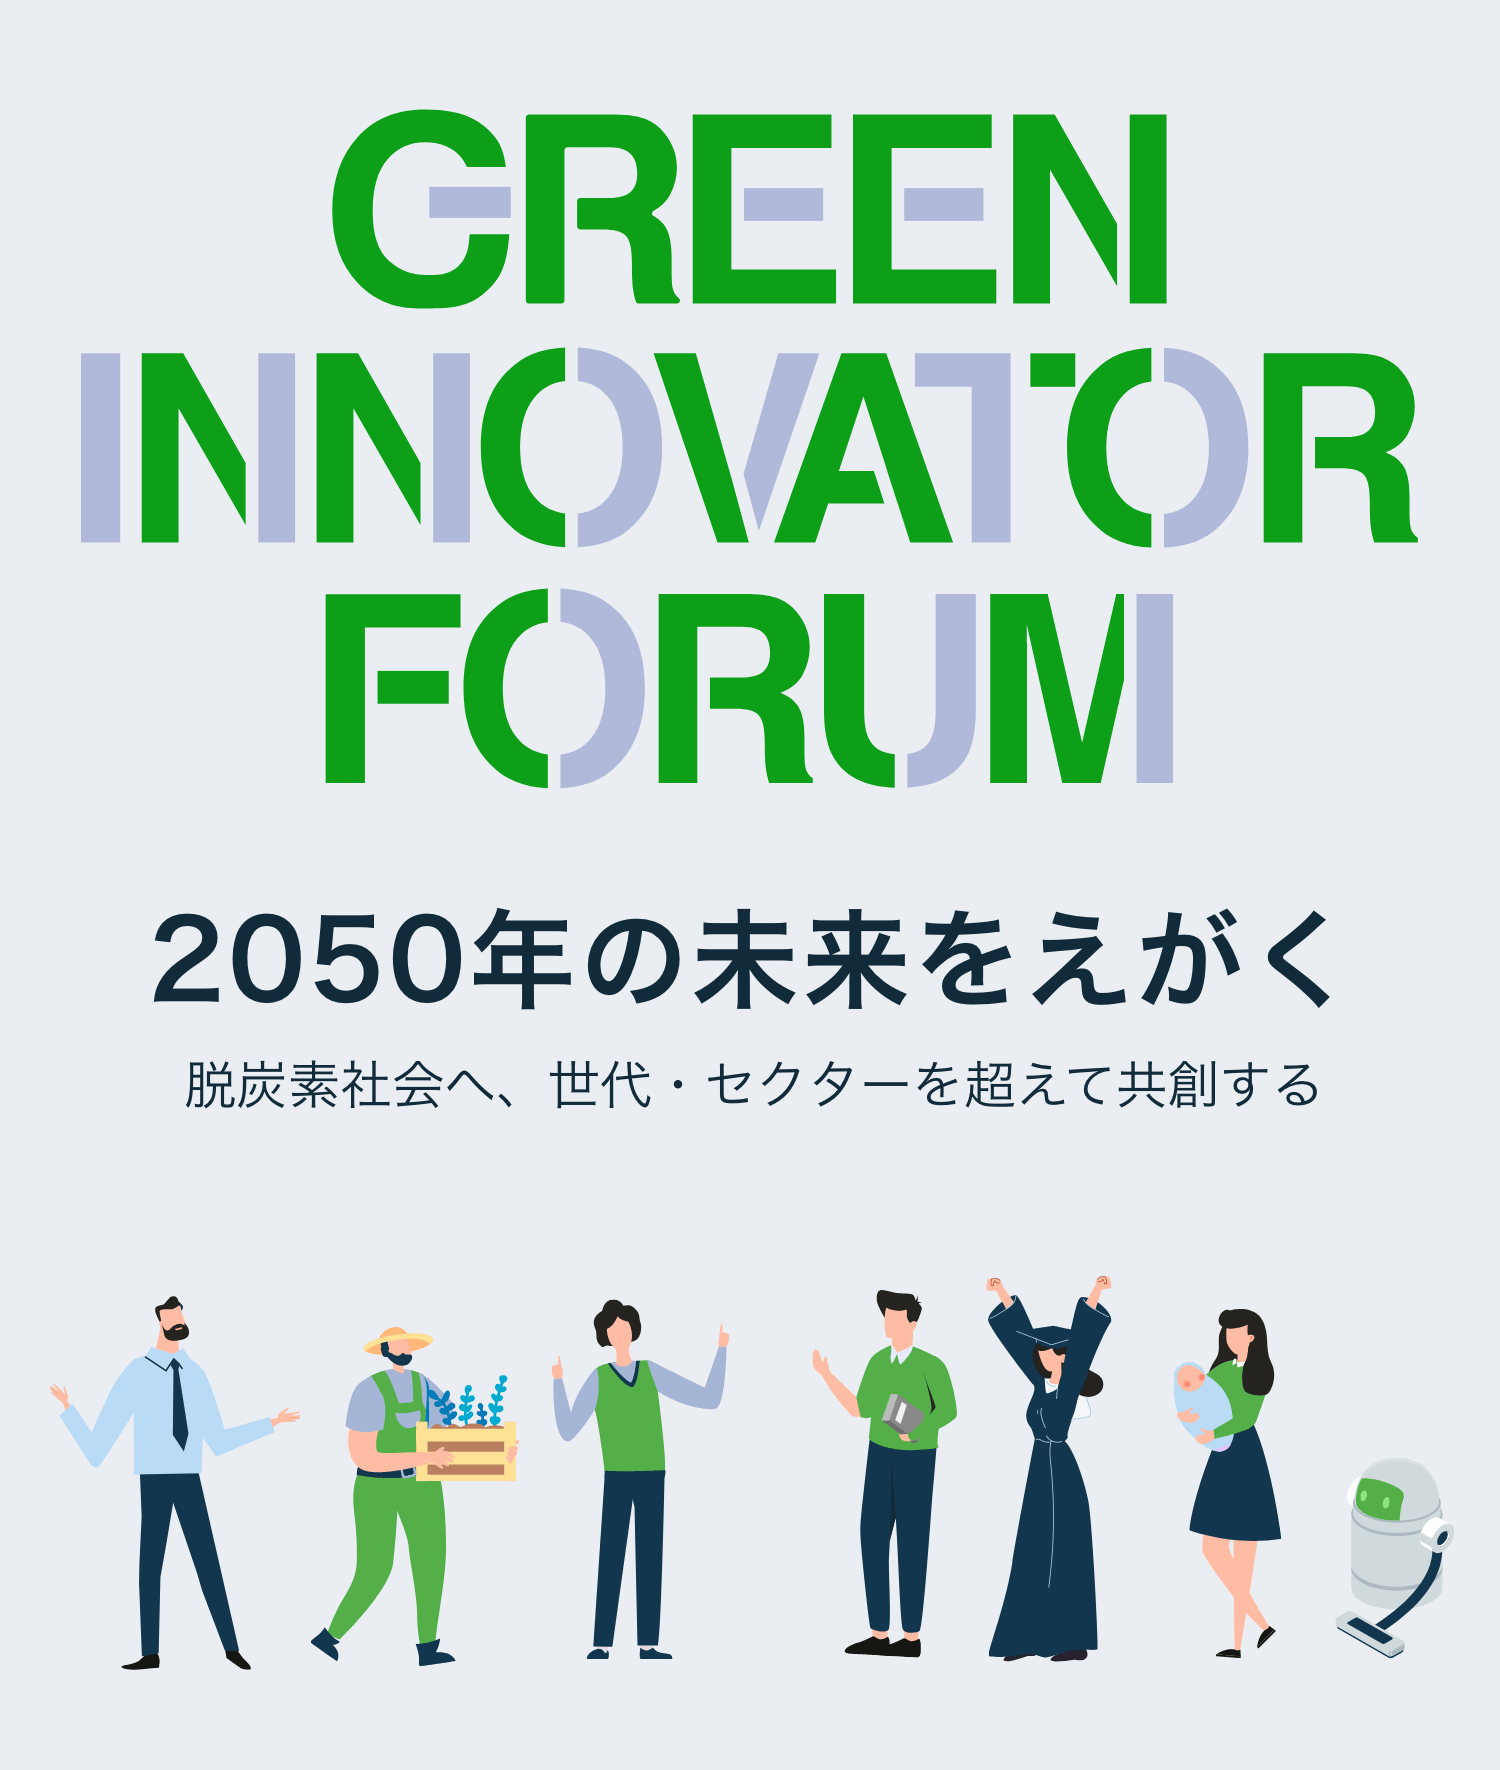 Green Innovator Forum